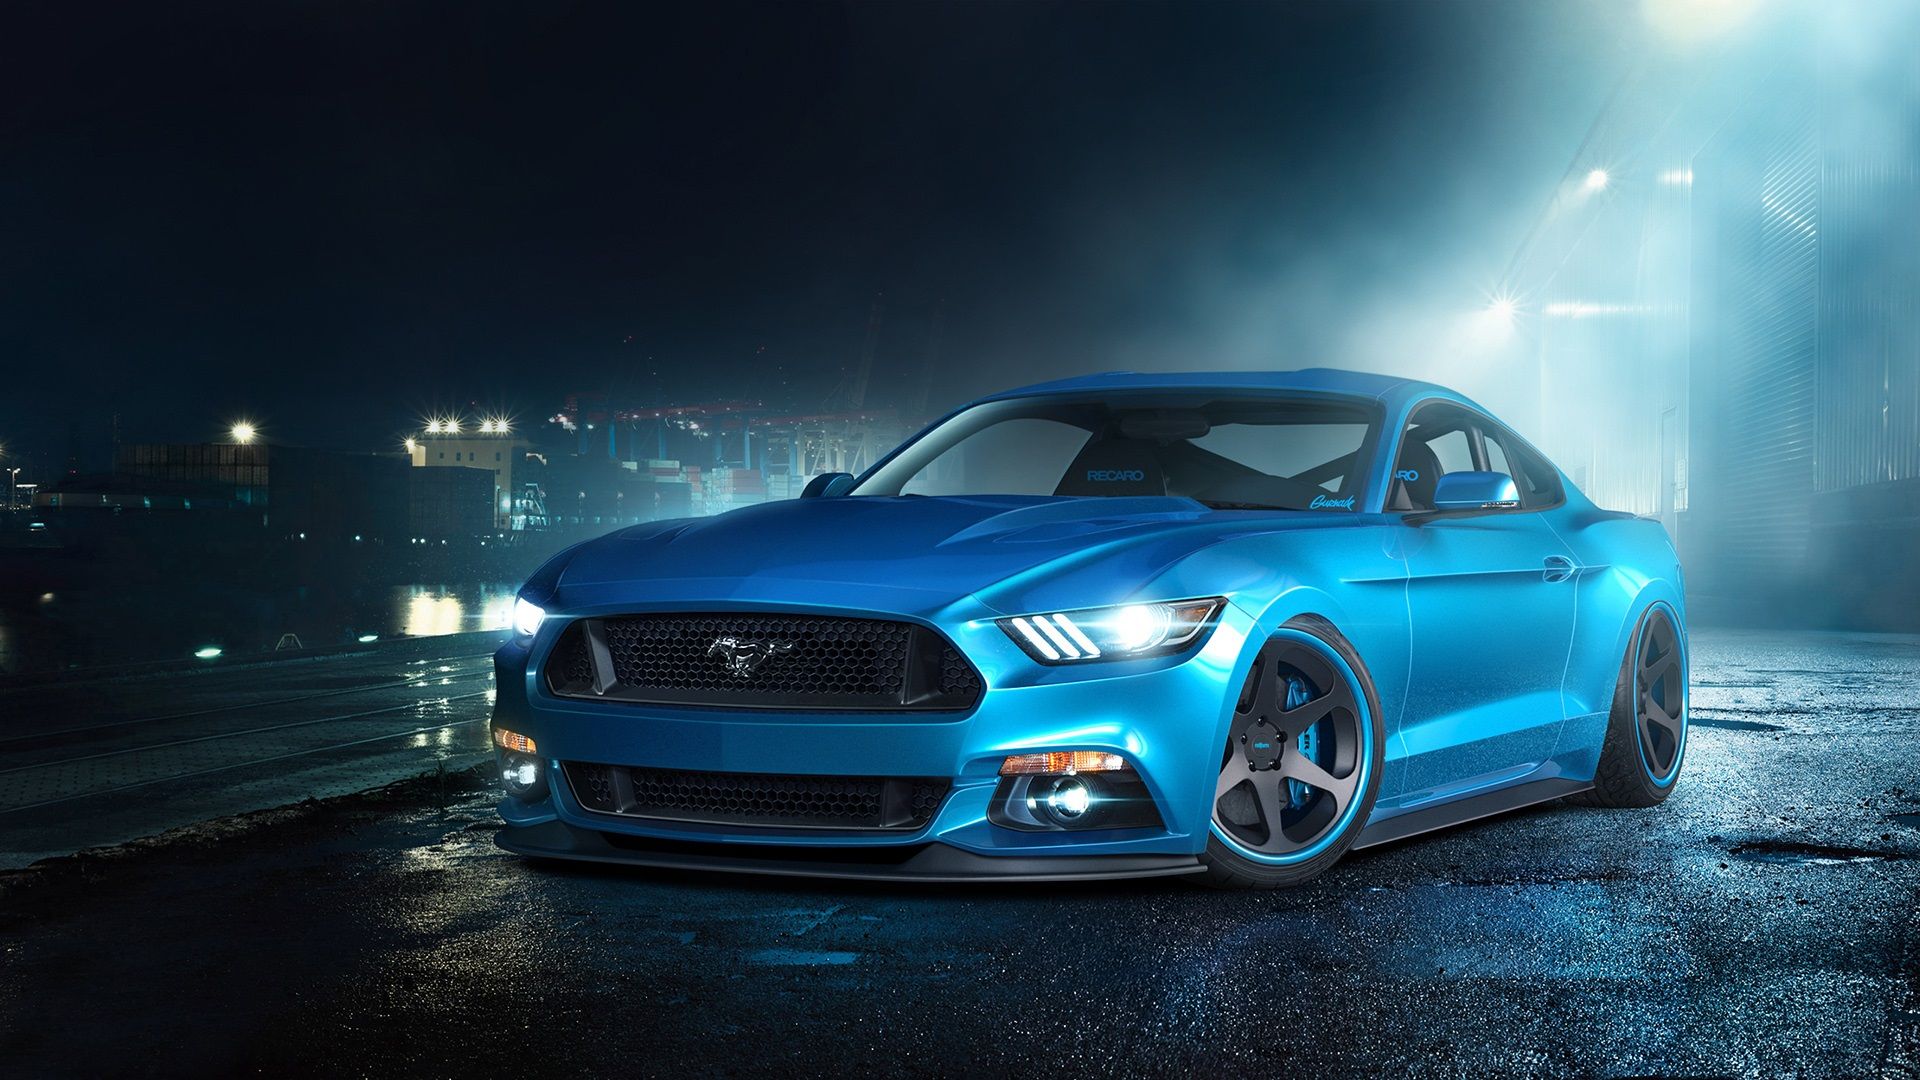  Ford Hintergrundbild 1920x1080. Ford Mustang GT Supersportwagen blau 1920x1080 Full HD 2K Hintergrundbilder, HD, Bild